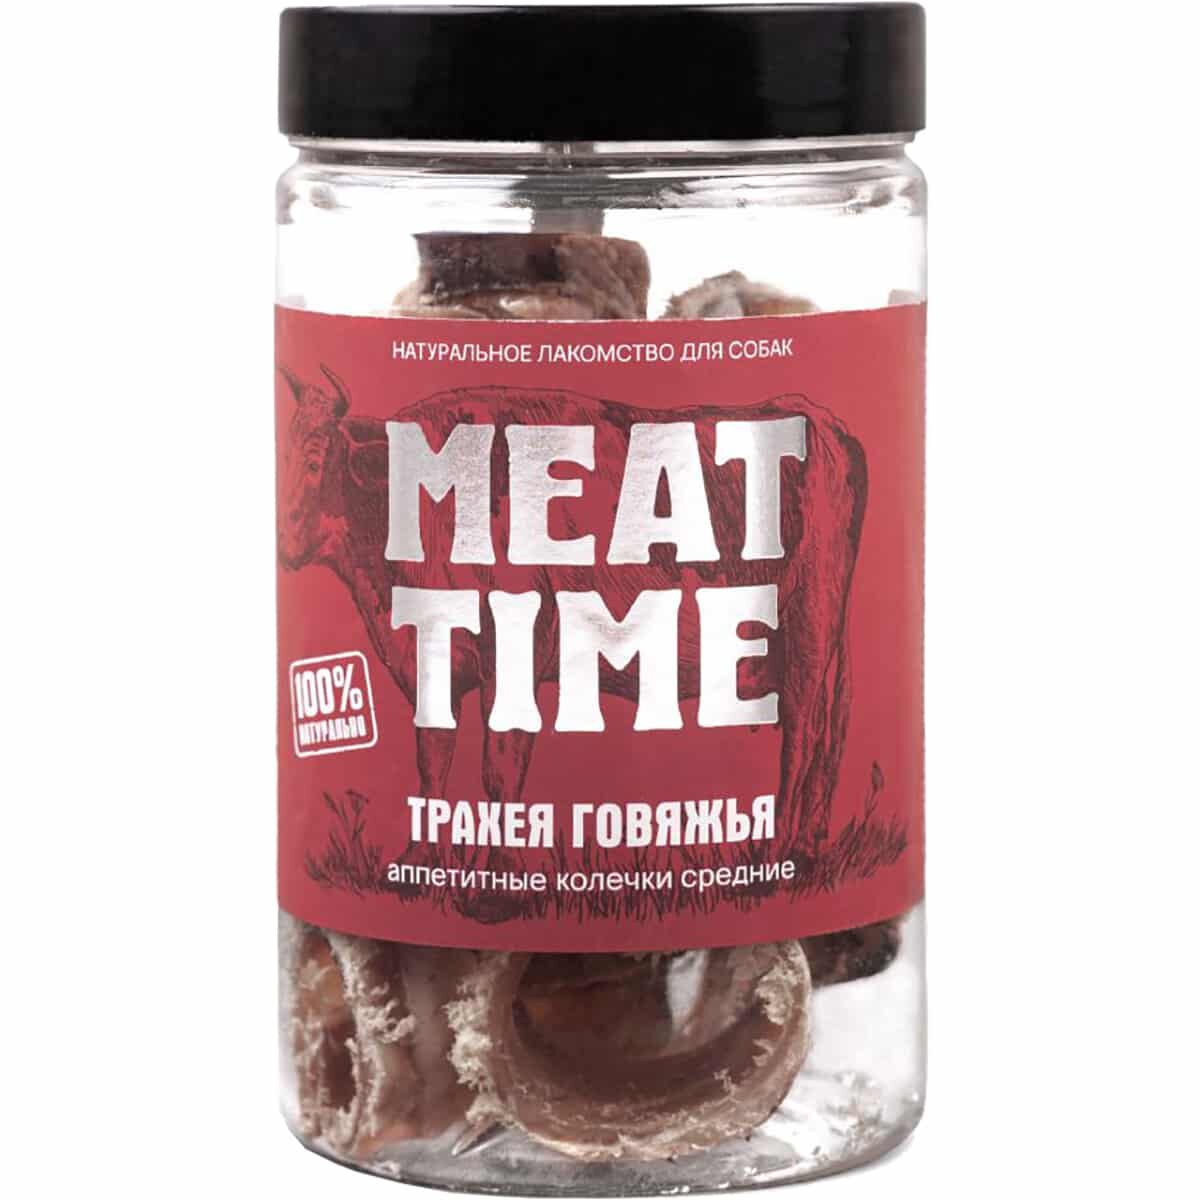 Лакомство Meat Time Трахея для собак (Колечки средние, пластиковая банка, 90г)